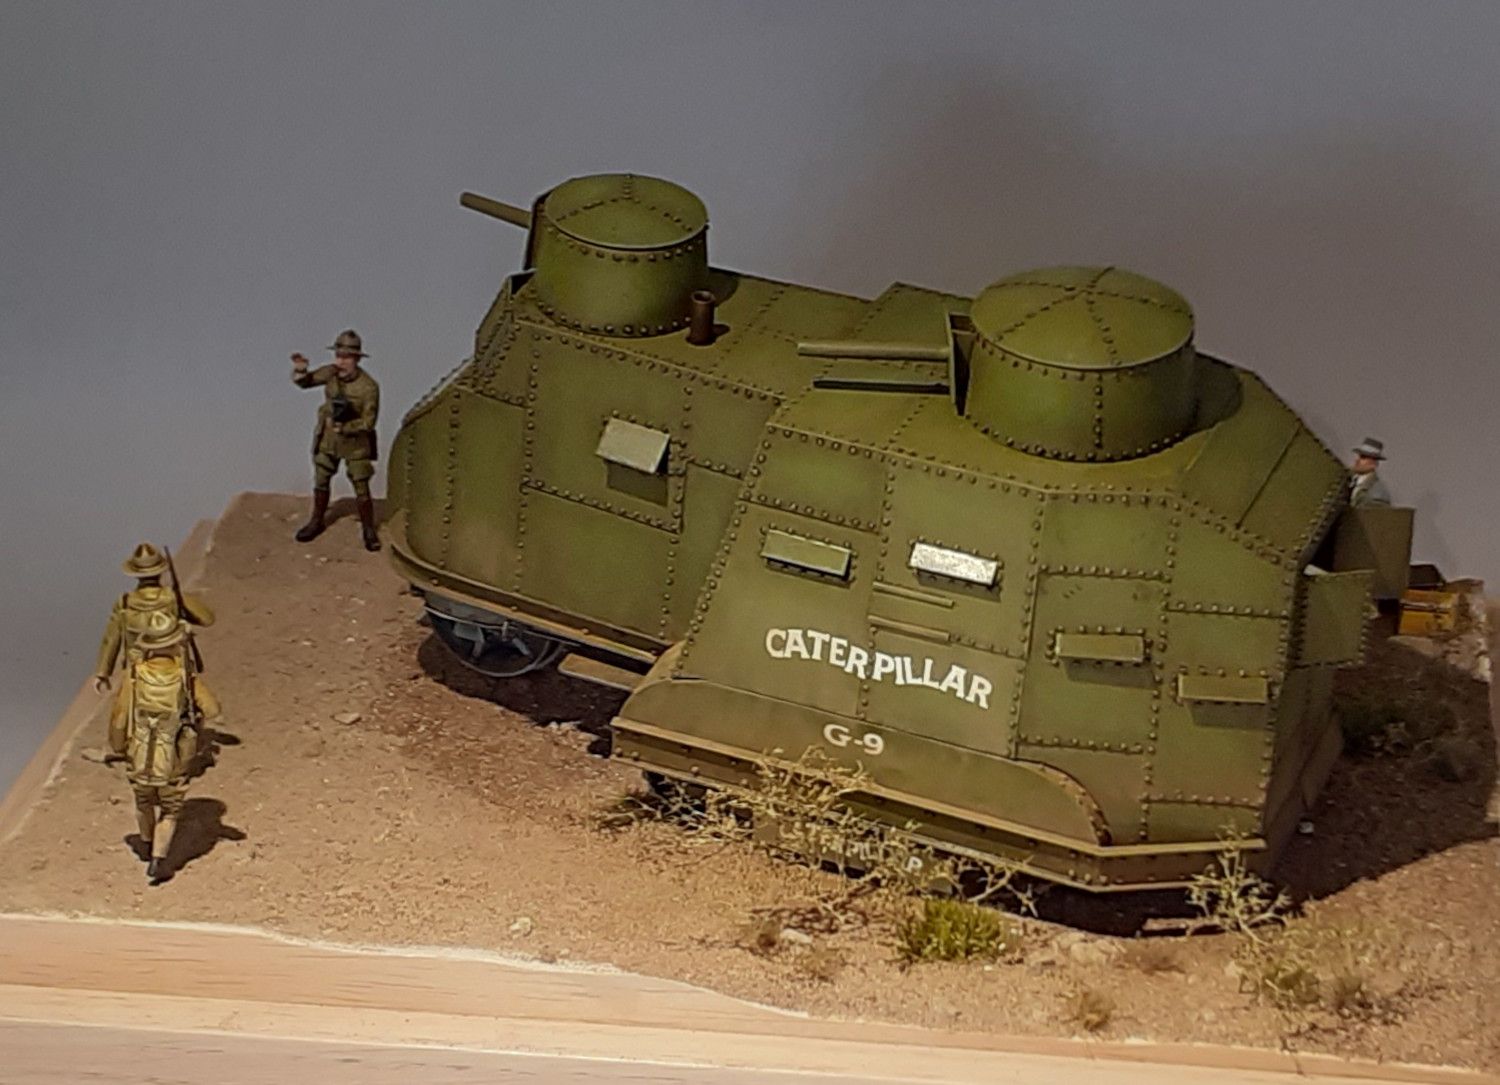 Caterpillar G9 : 1er tank US de l'Histoire [base tracteur Holt Roden + scratch] de Lostiznaos 6640ff0f7ad63